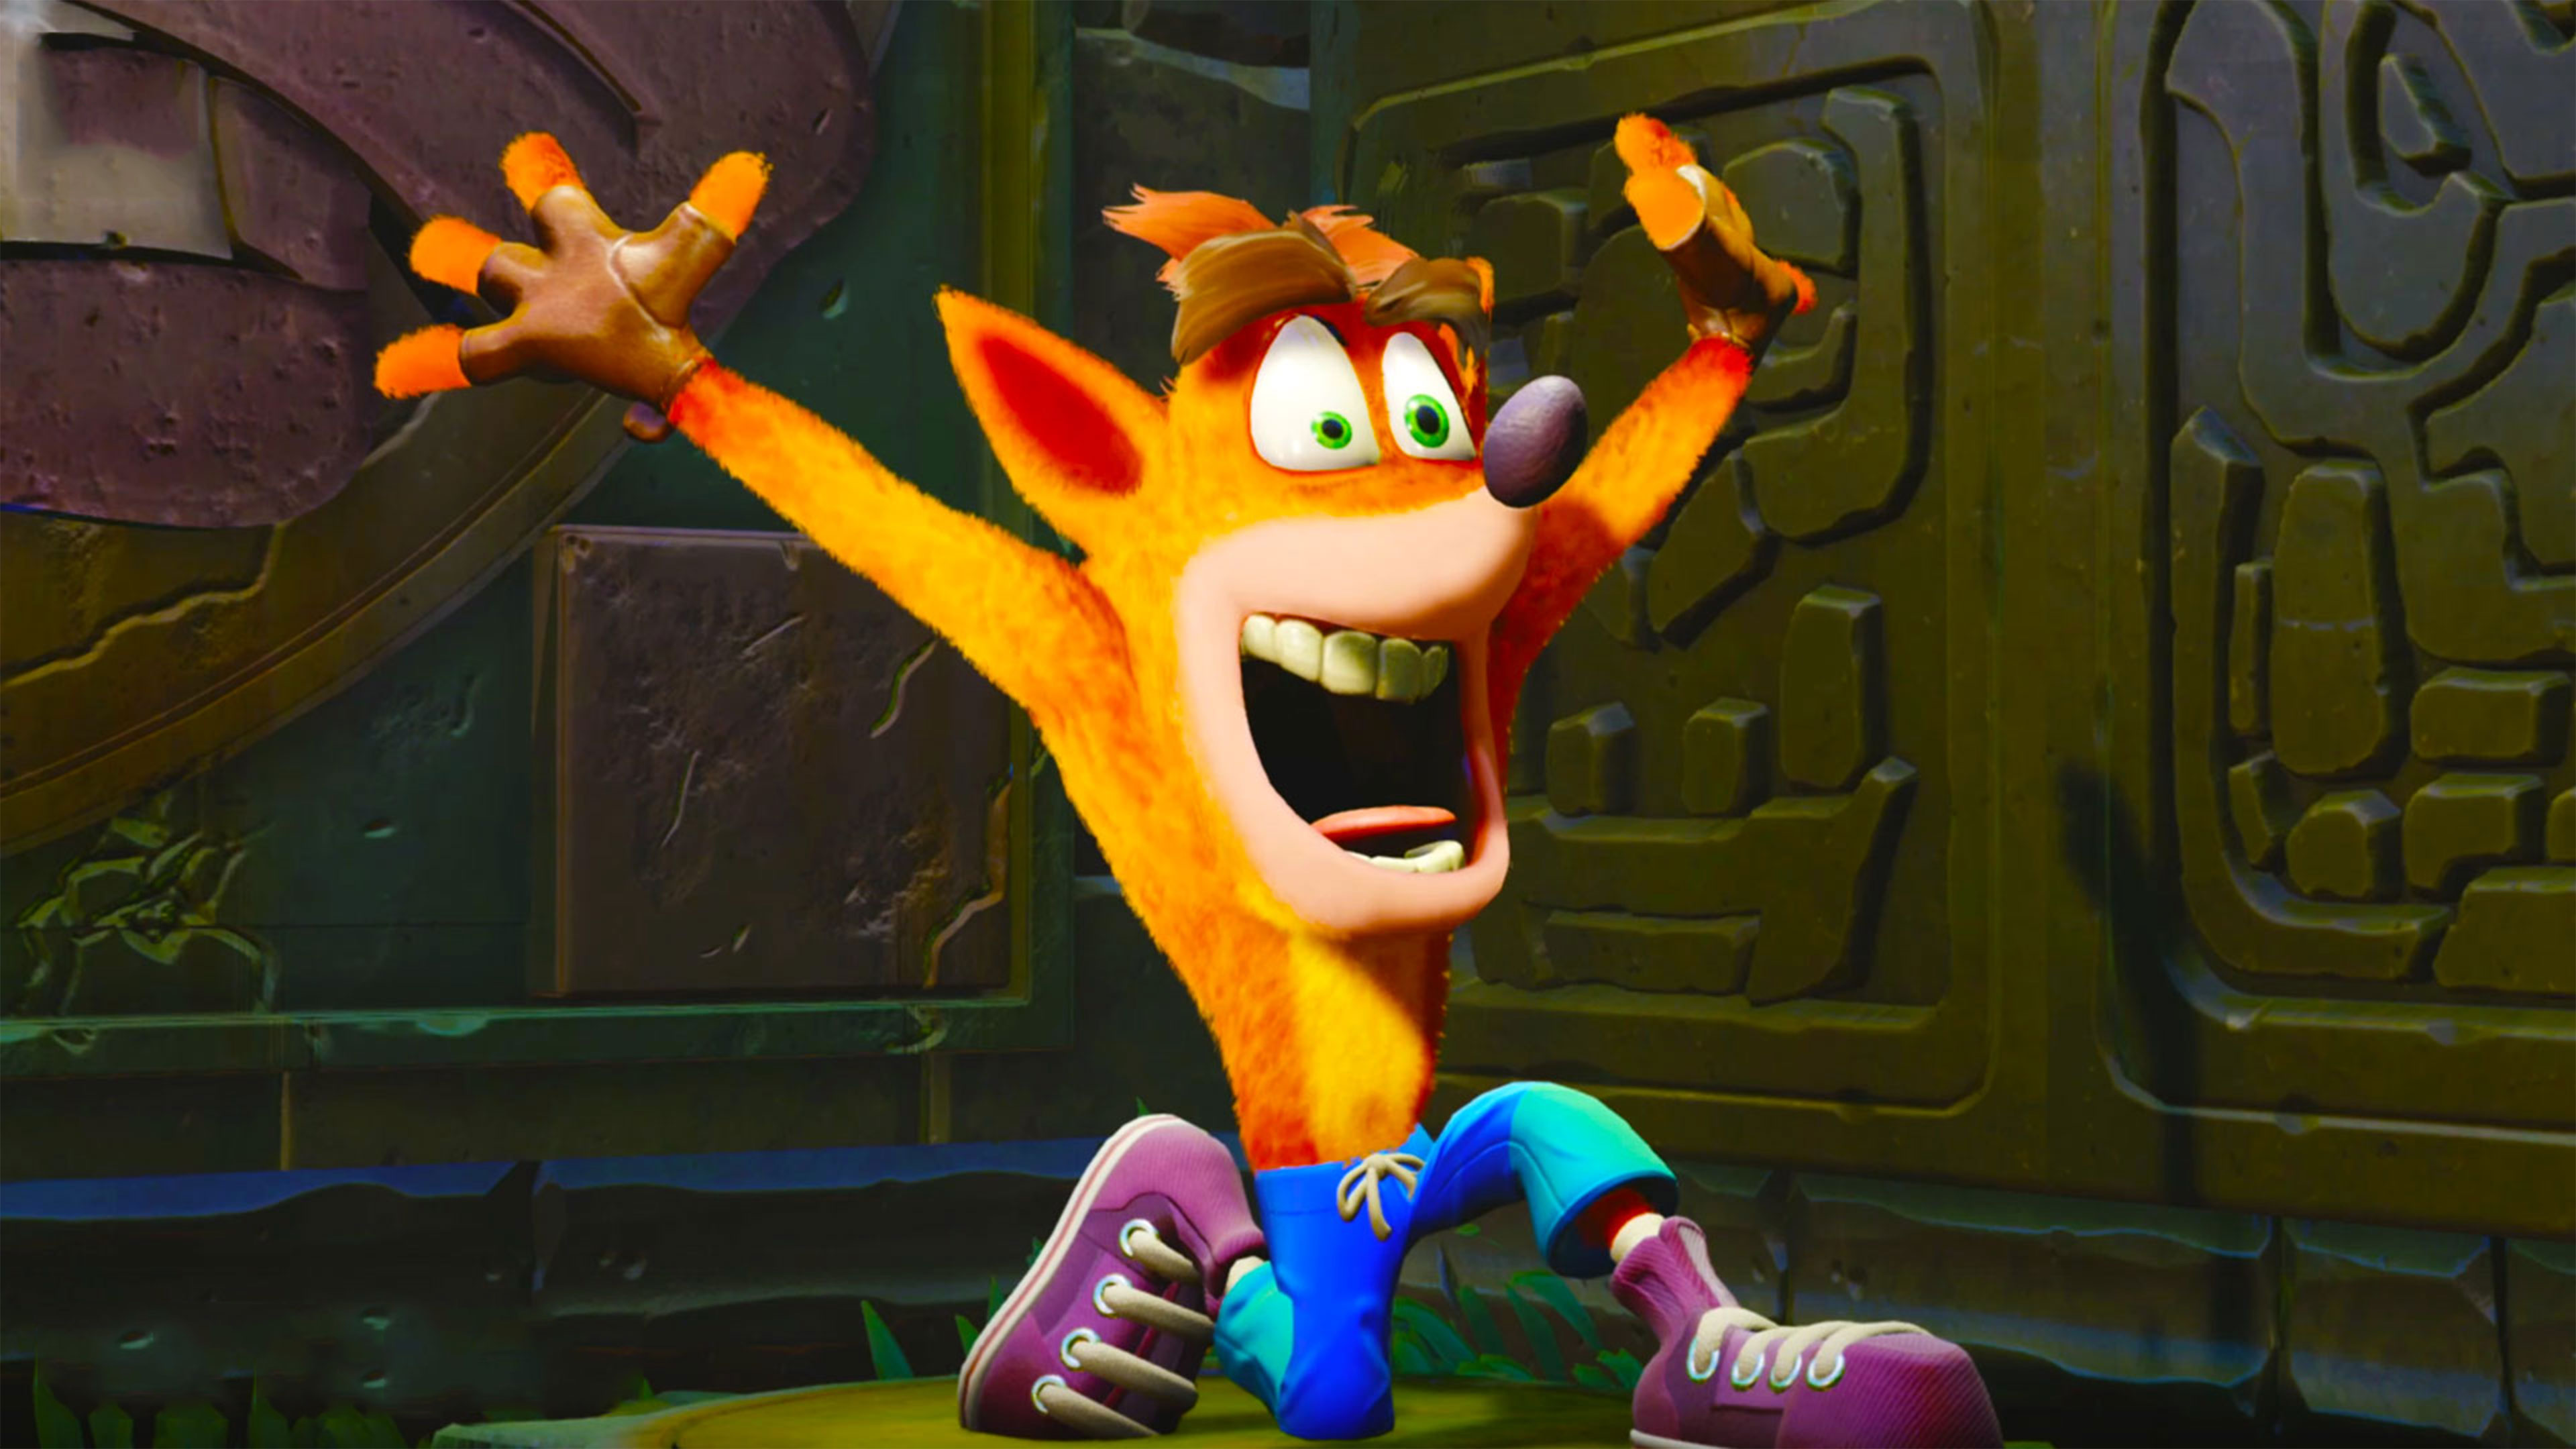 Crash Bandicoot N Sane Trilogy Wallpapers in Ultra HD 4K   Gameranx